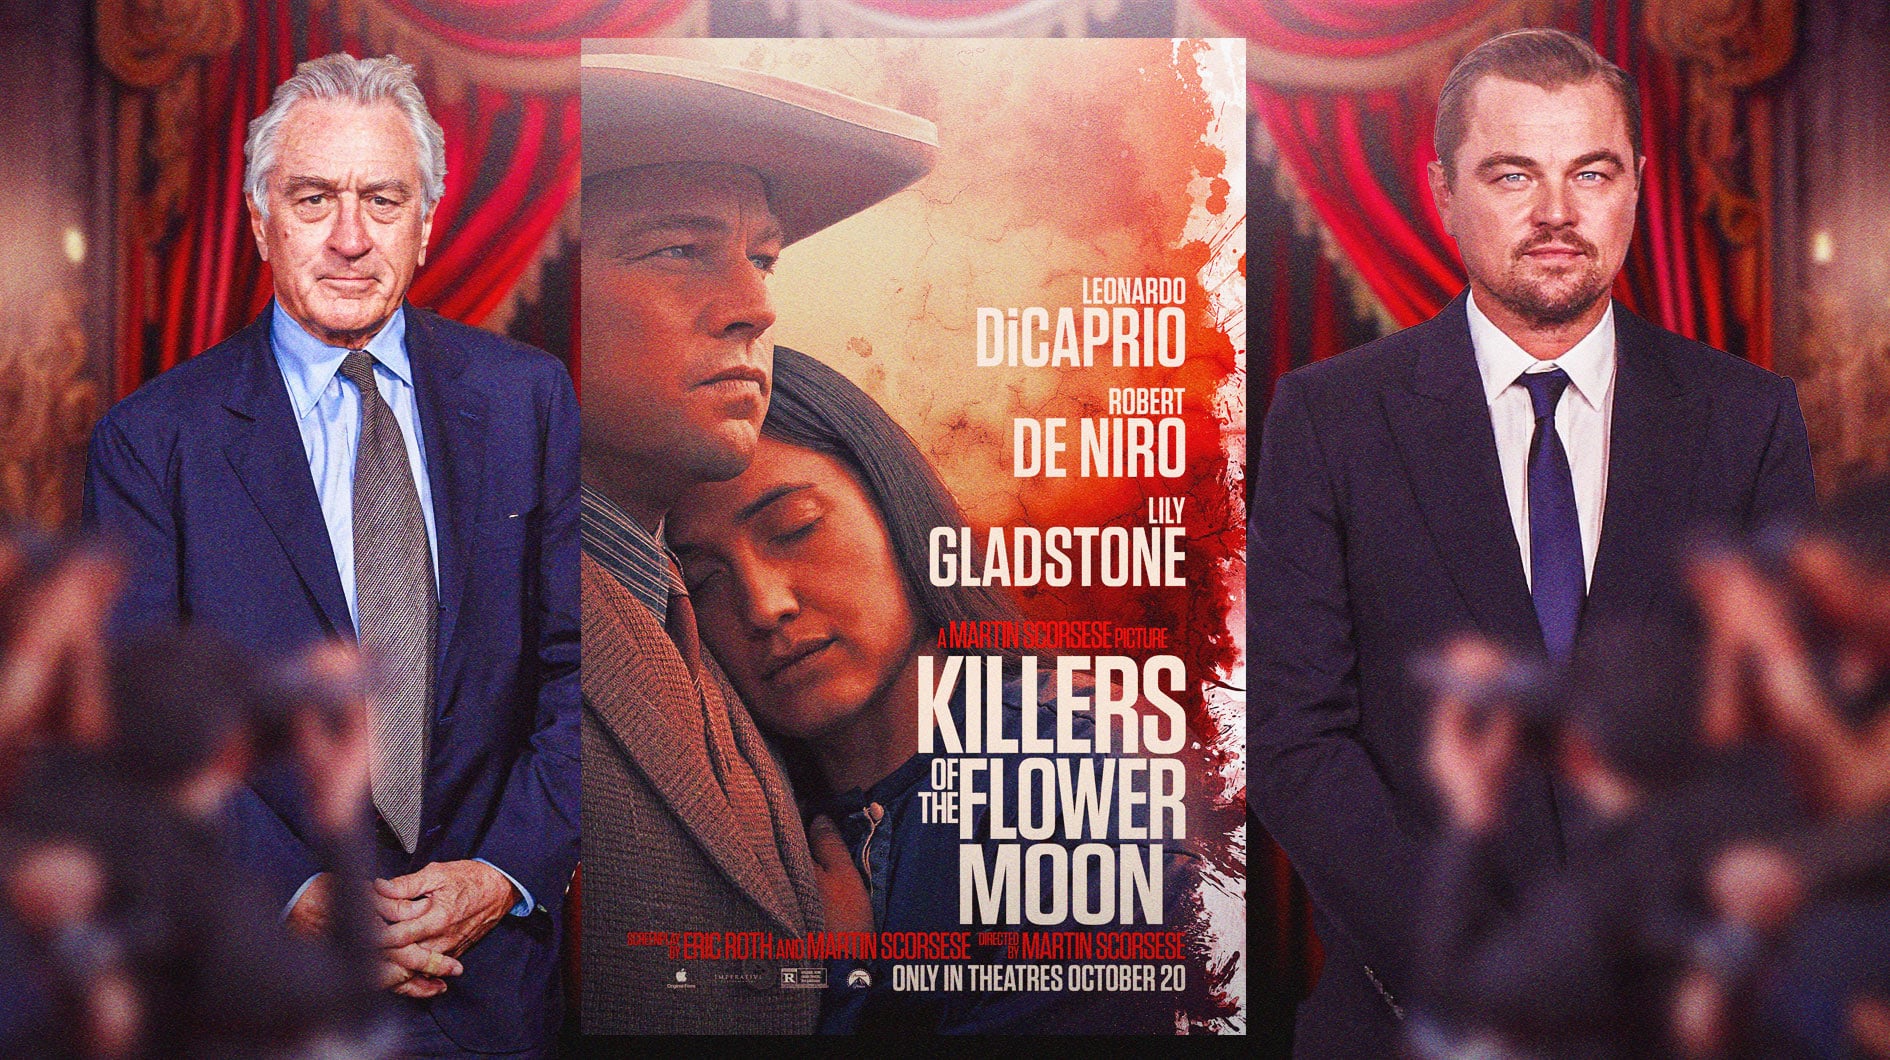 Killers of the Flower Moon stars Robert De Niro and Leonardo DiCaprio.